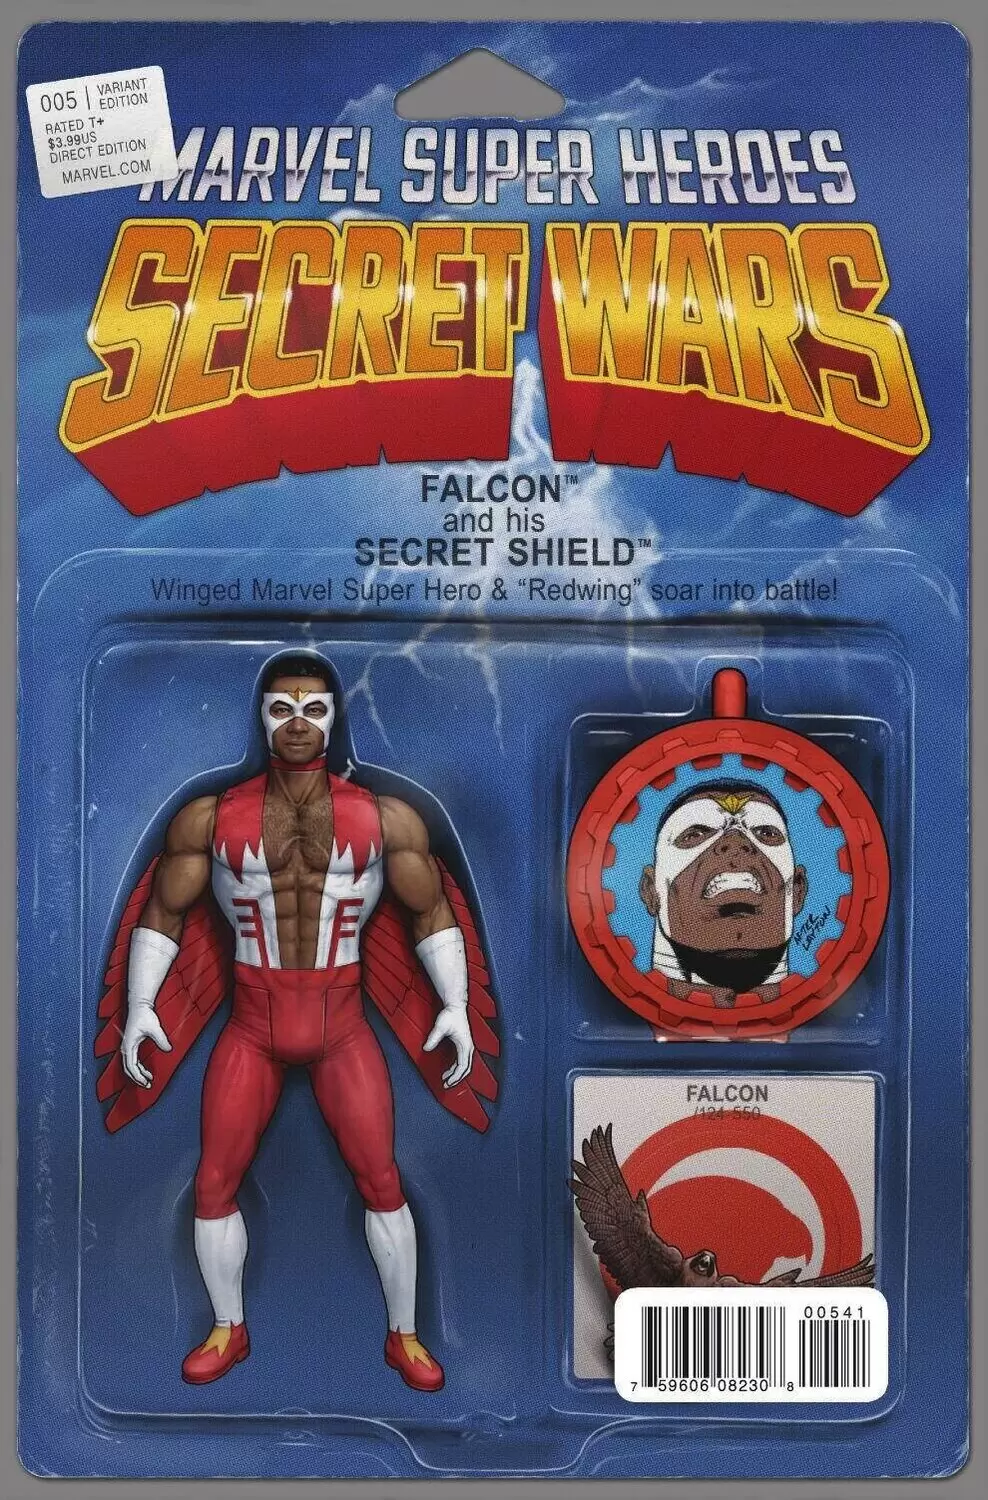 Marvel Super Heroes : Secret Wars - Falcon